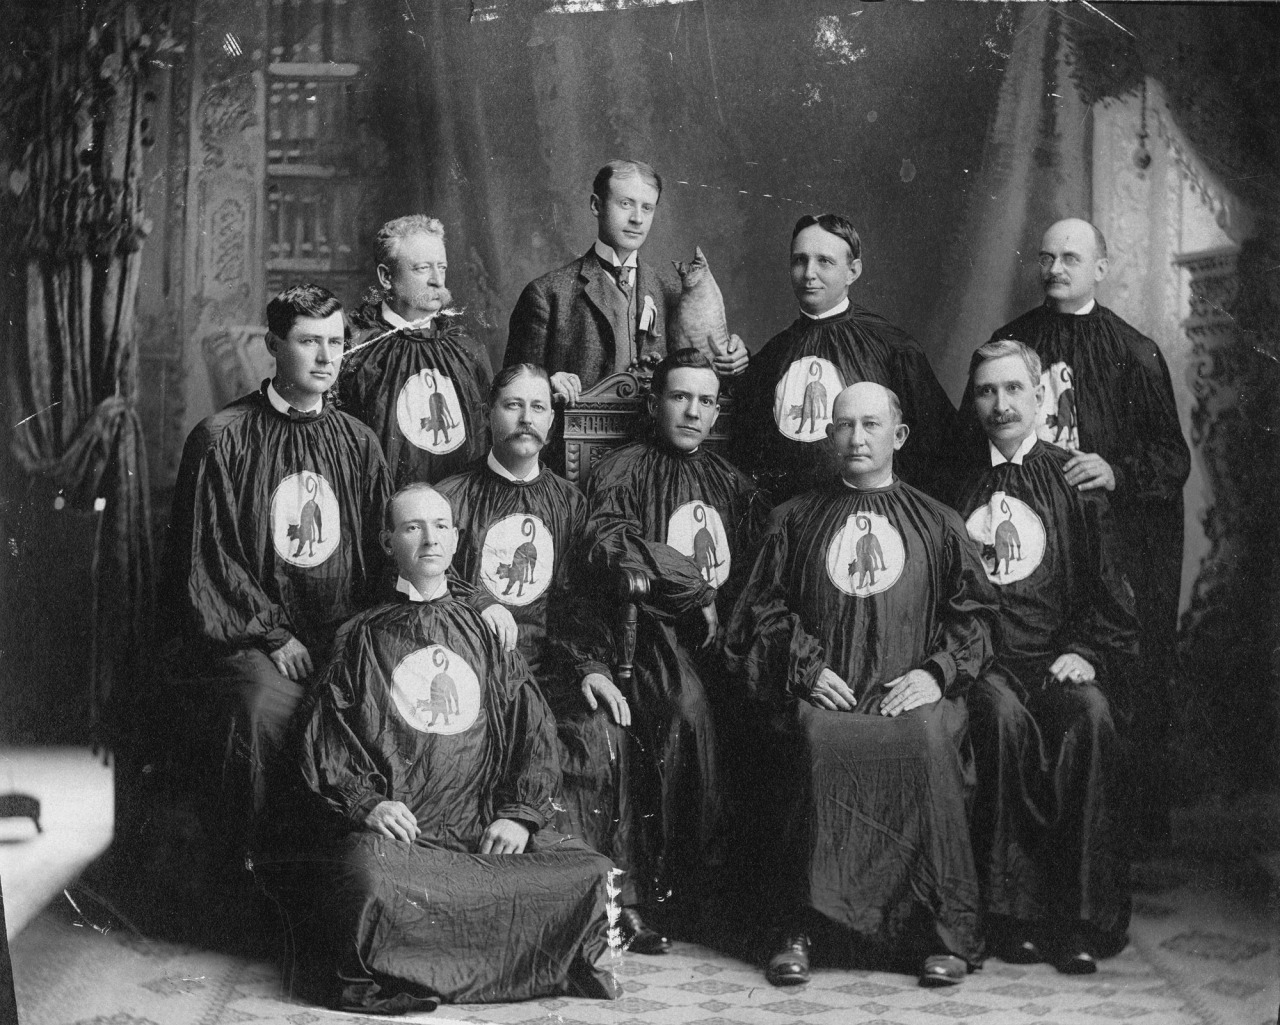 historicaltimes:
“The International Concatenated Order of Hoo-Hoo. 1905. 1905
”